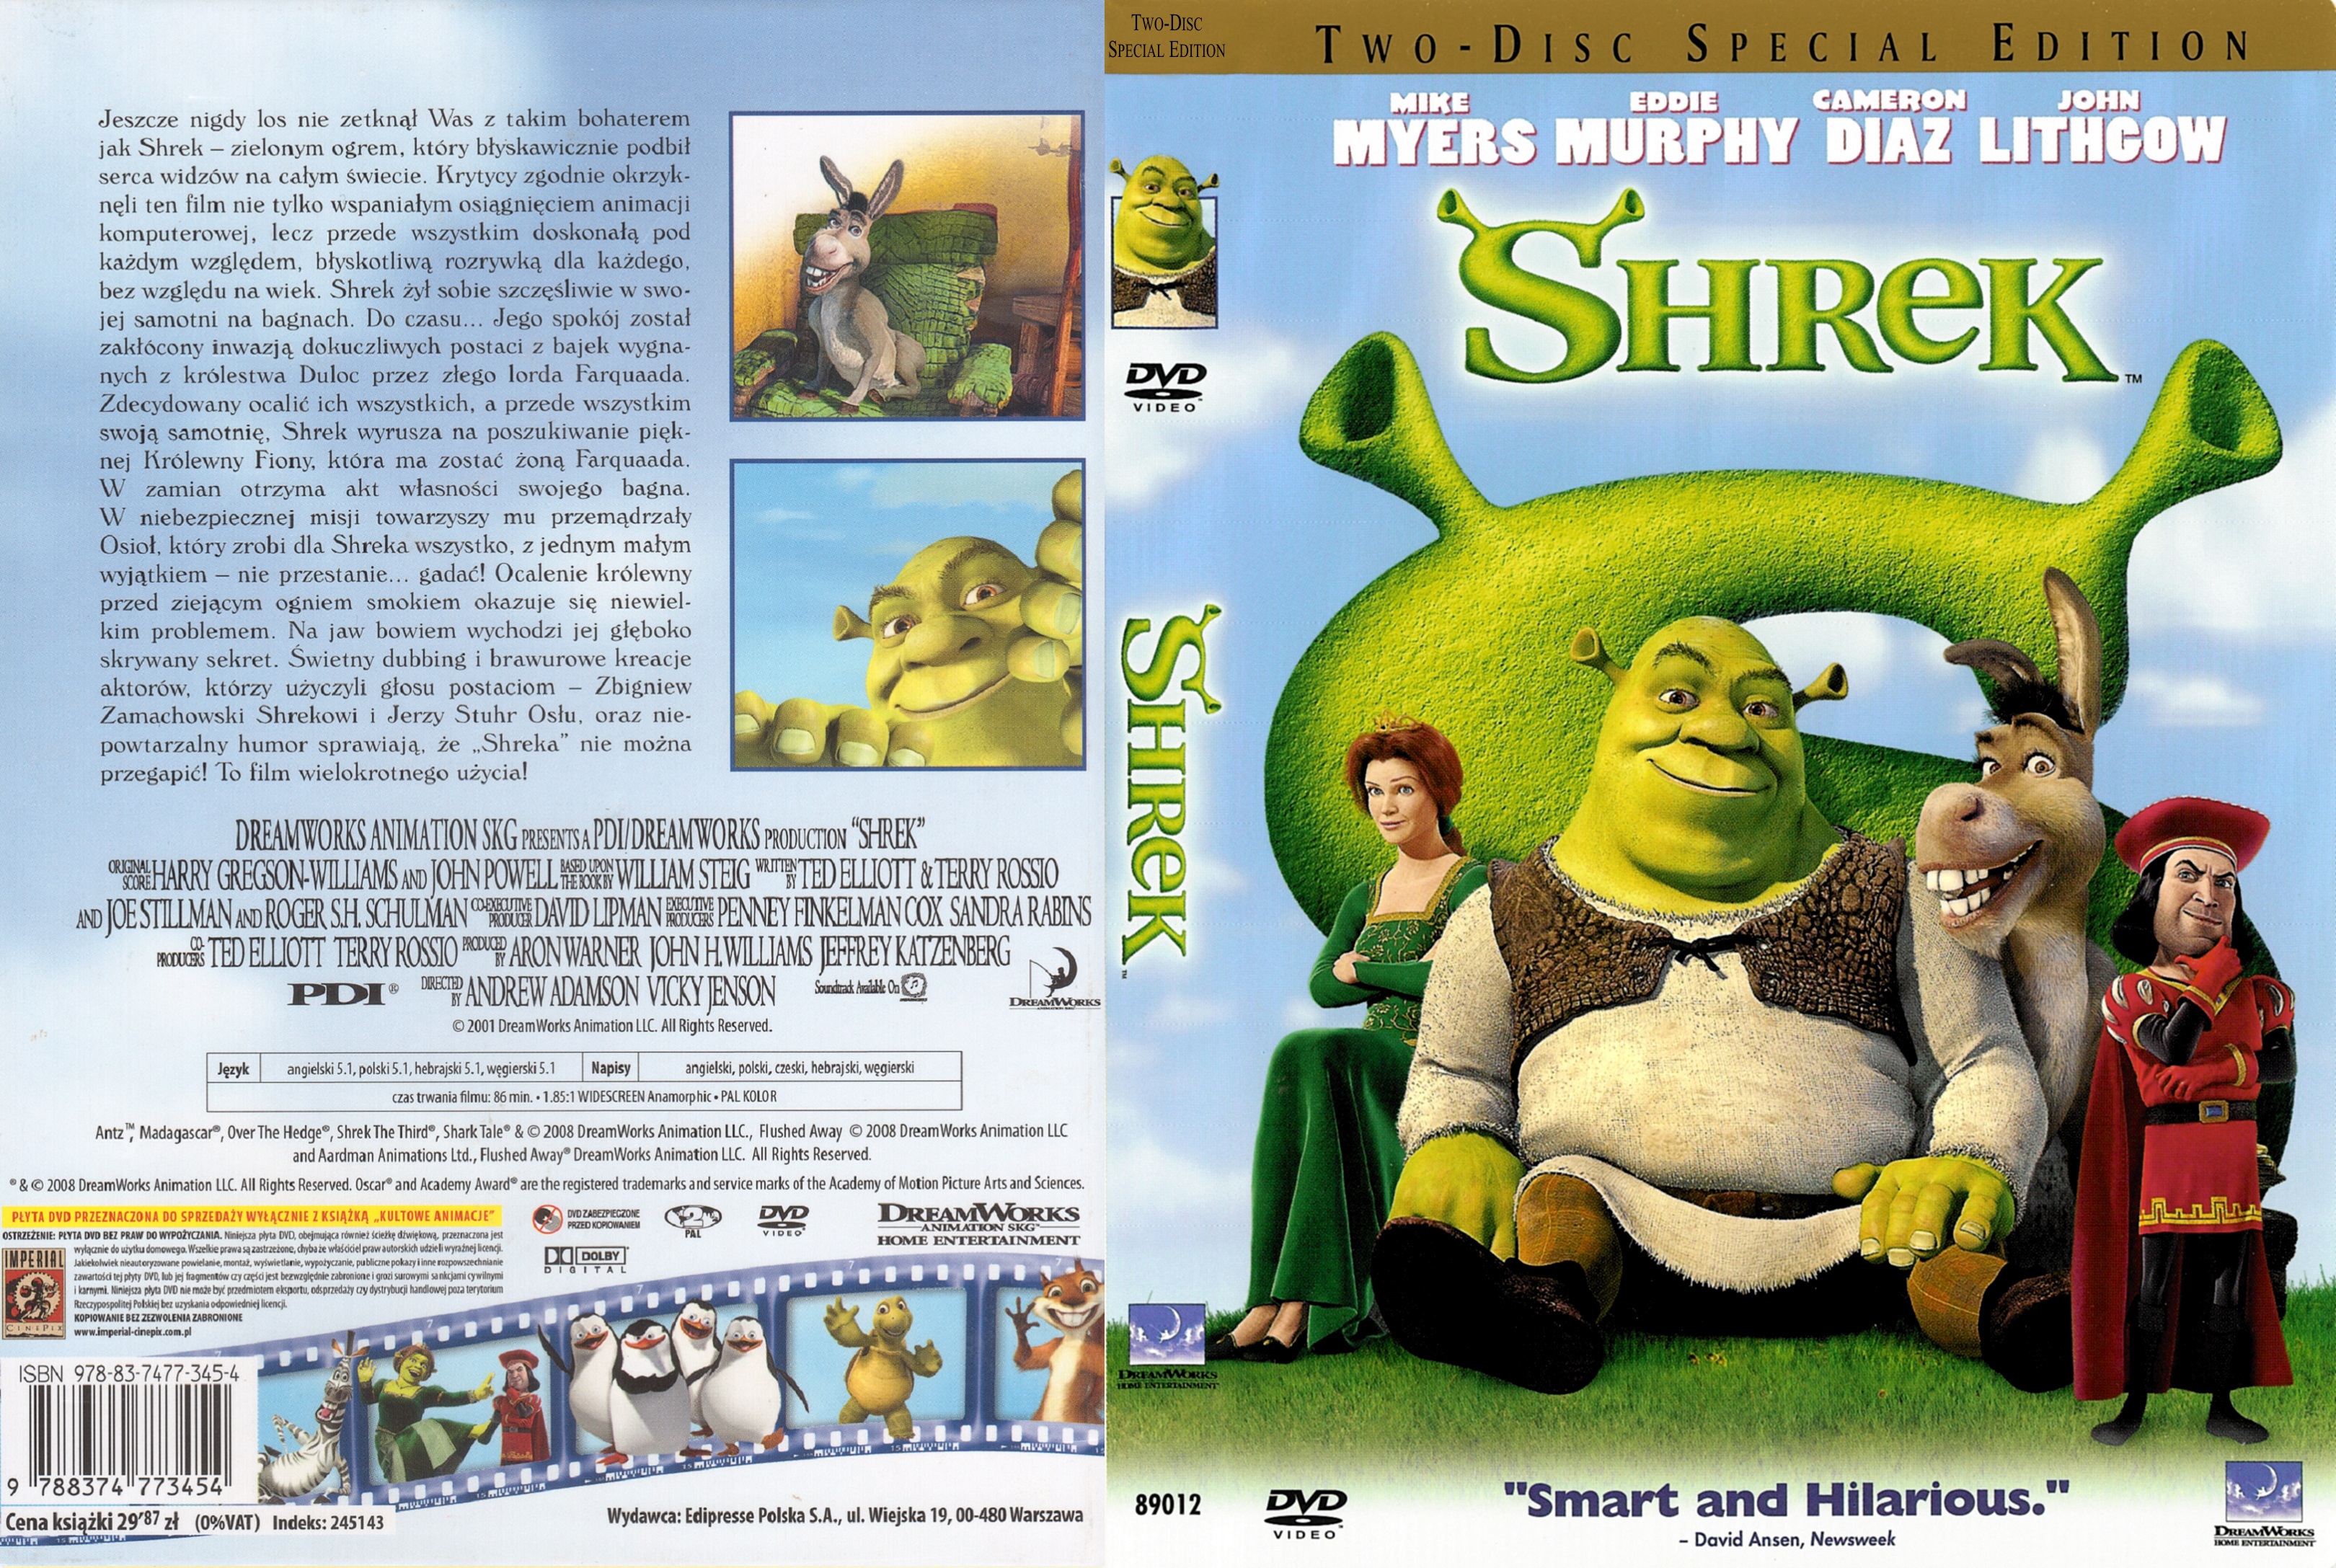 Covers Box Sk Shrek 2001 High Quality Dvd Blueray Movie